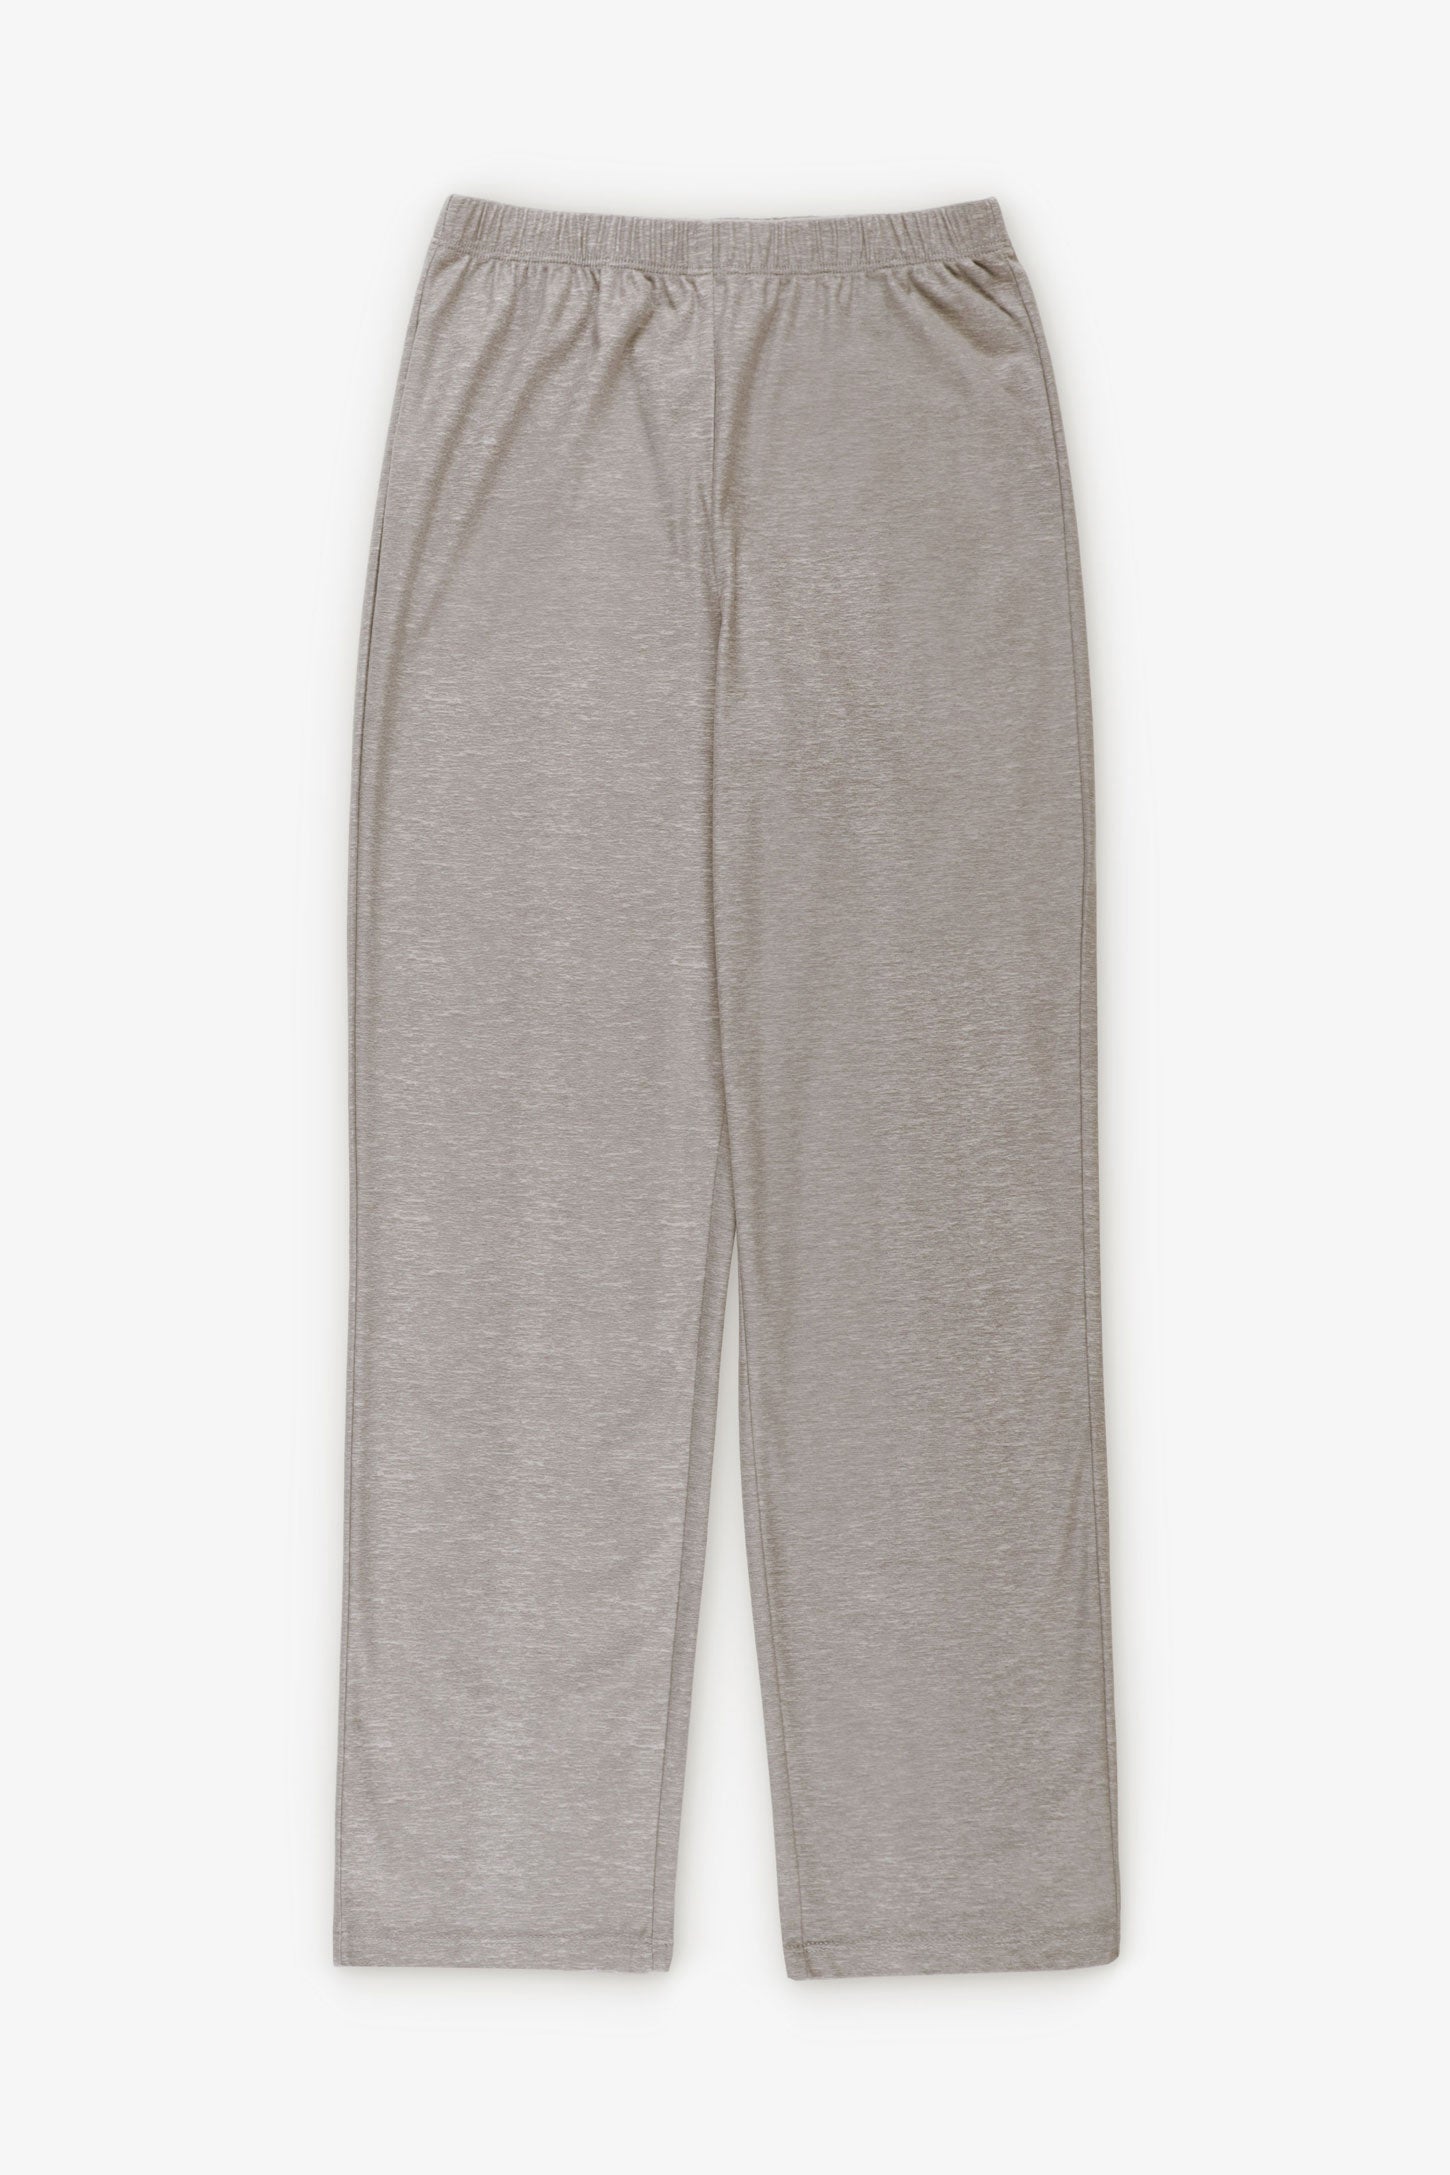 Pantalon pyjama - Ado garçon && GRIS MIXTE